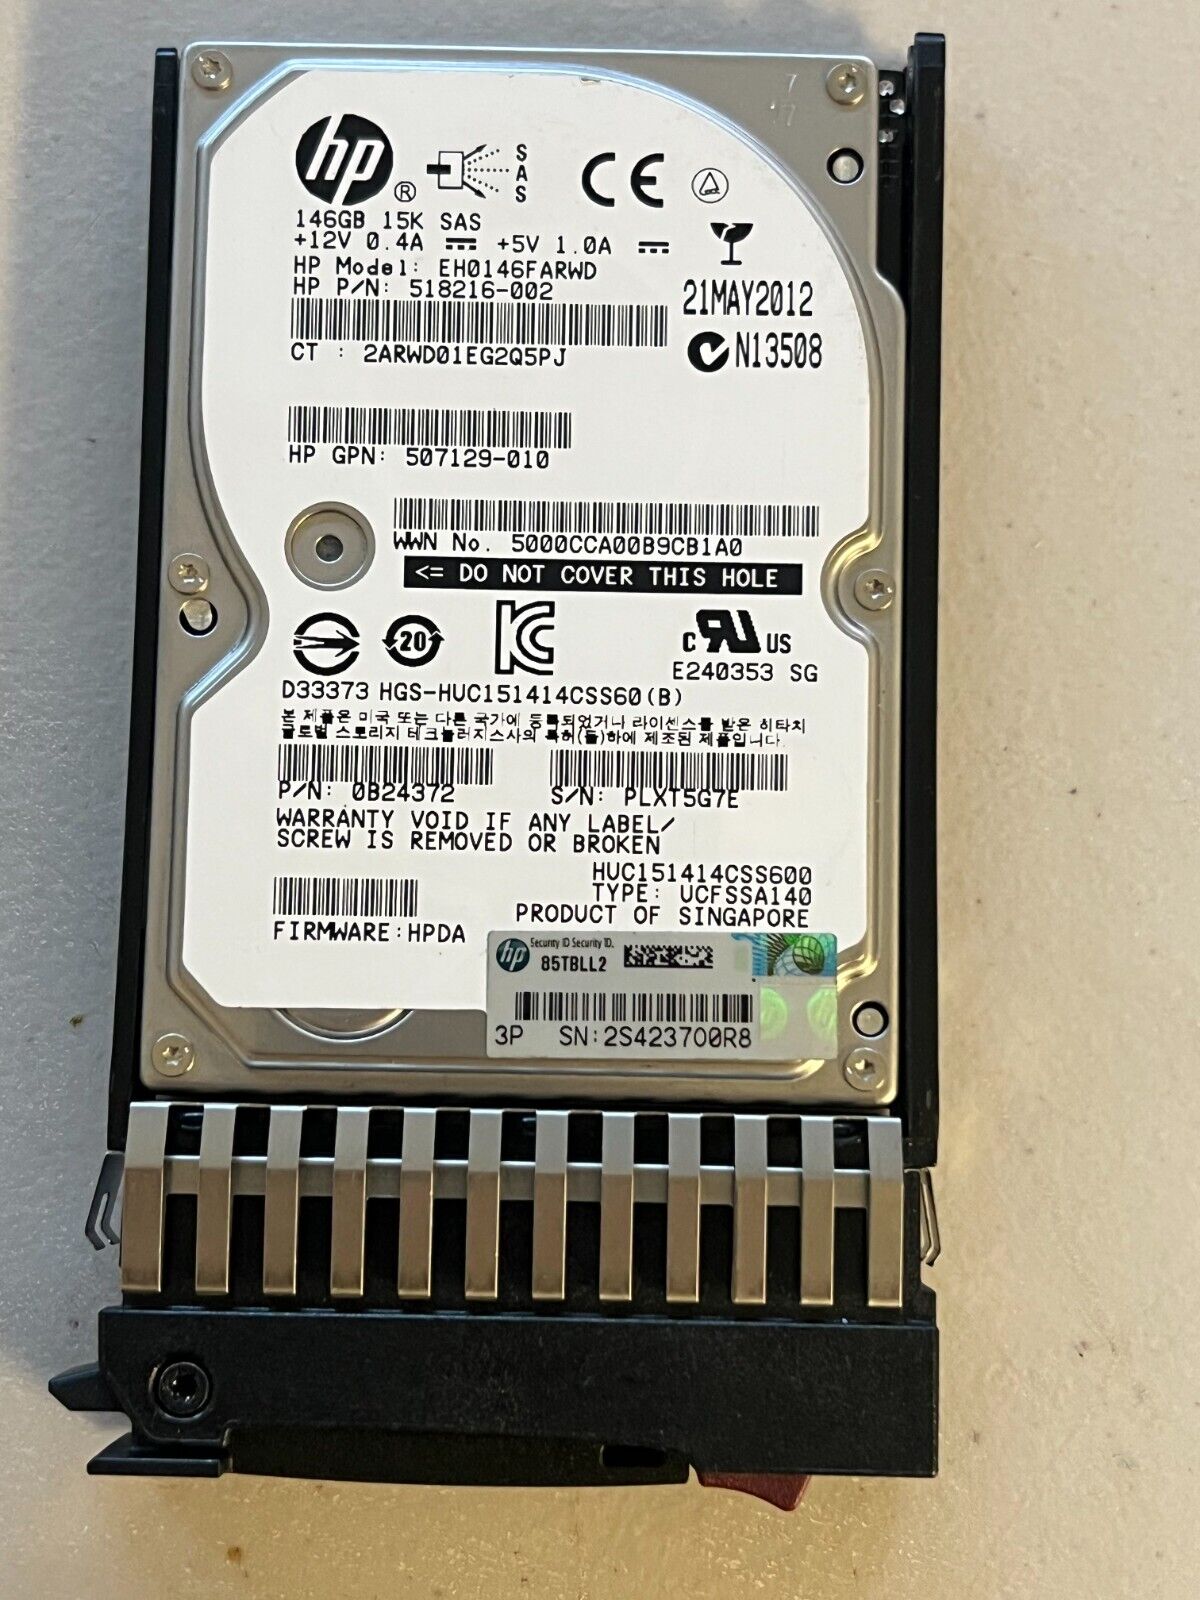 HP 300GB 15k SAS 518216-002 ORIGINAL PACKAGING